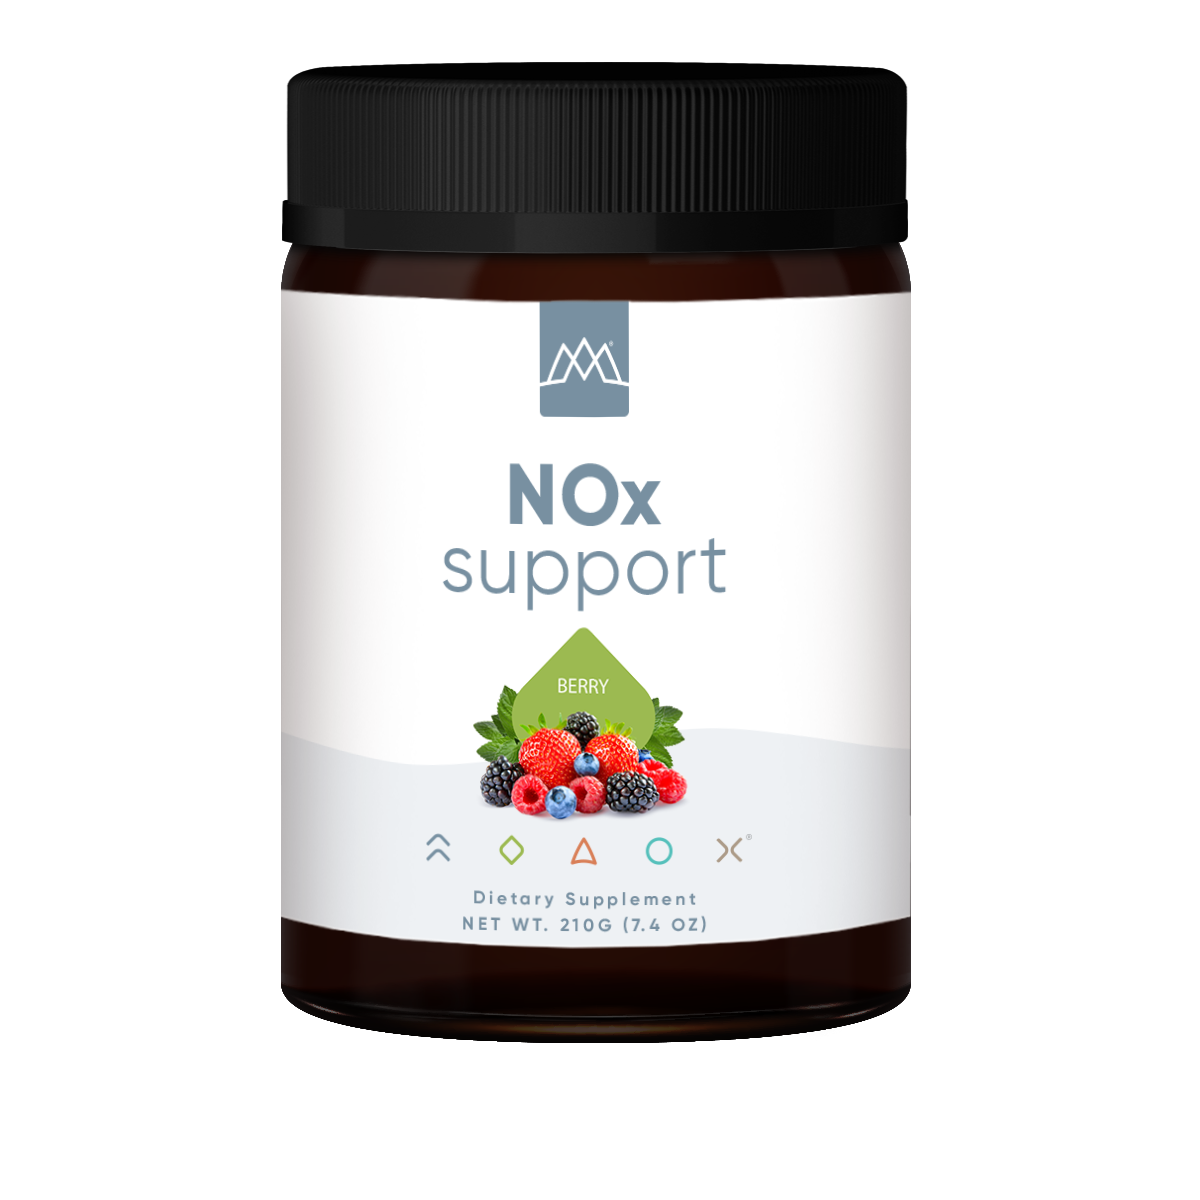 NOx Support